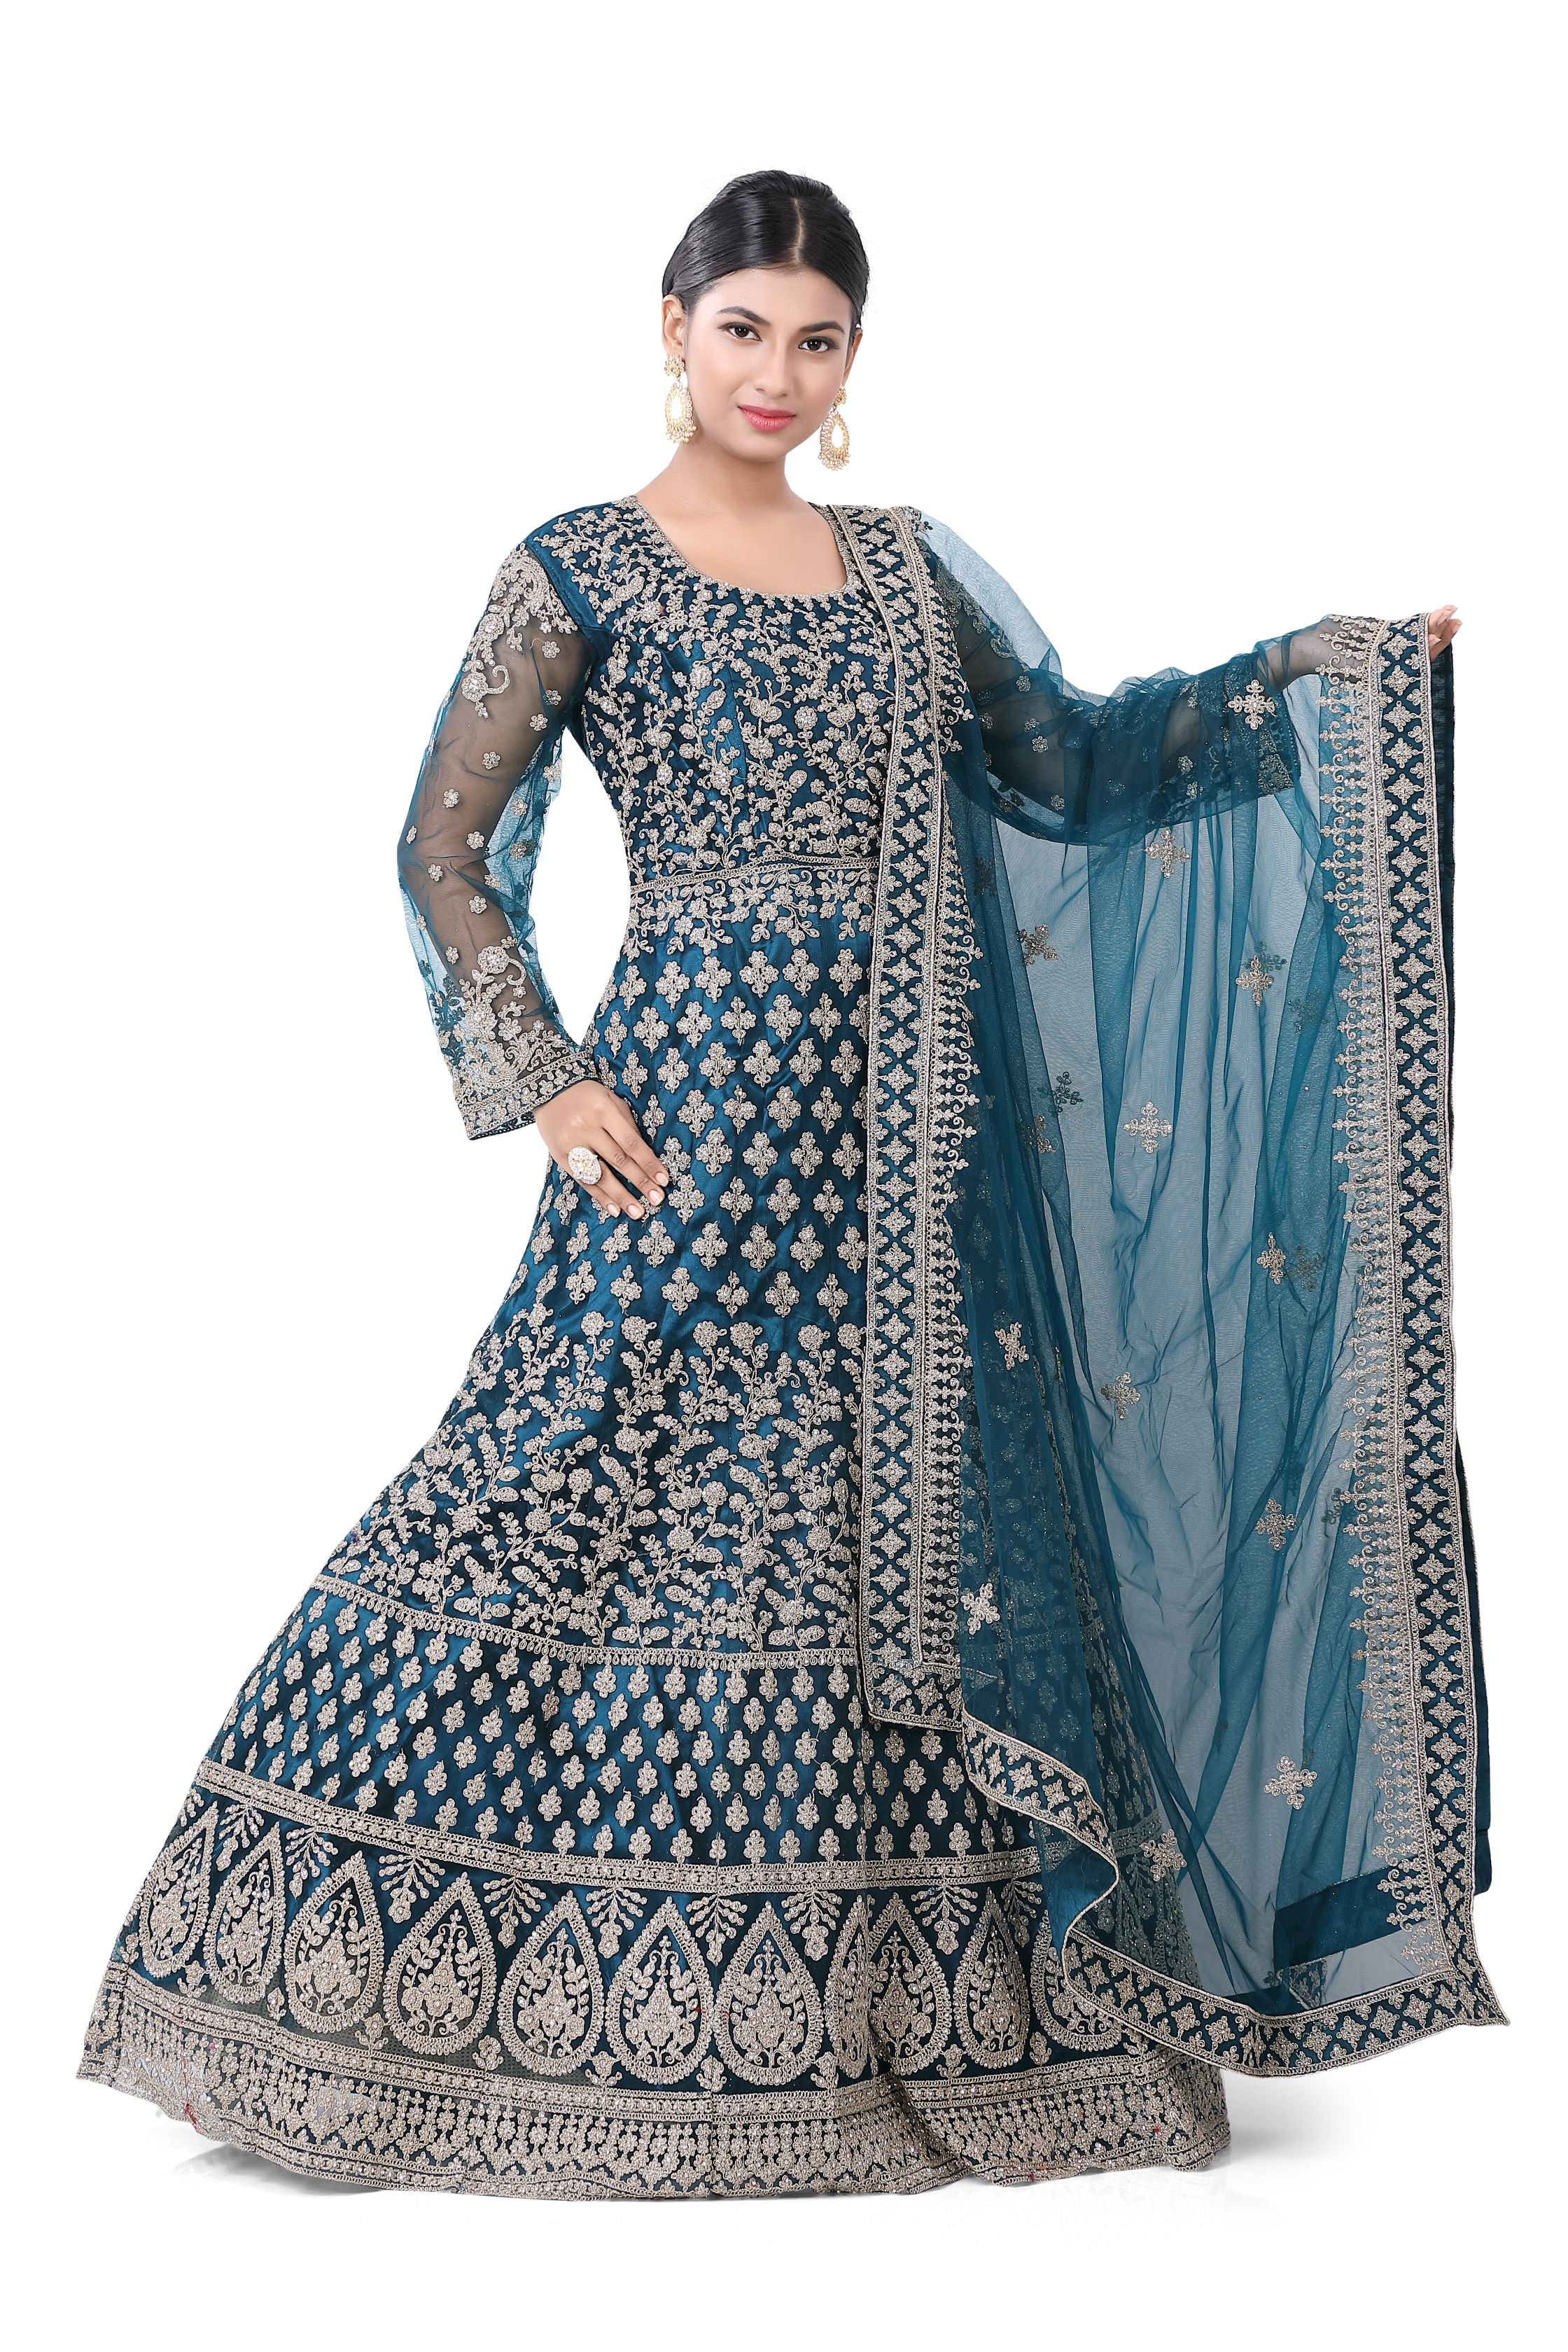 Purple Lacha Suit Lengha Choli Lehenga Long Top Lehanga Indian Sari Saree  Dress - SellersHub.io